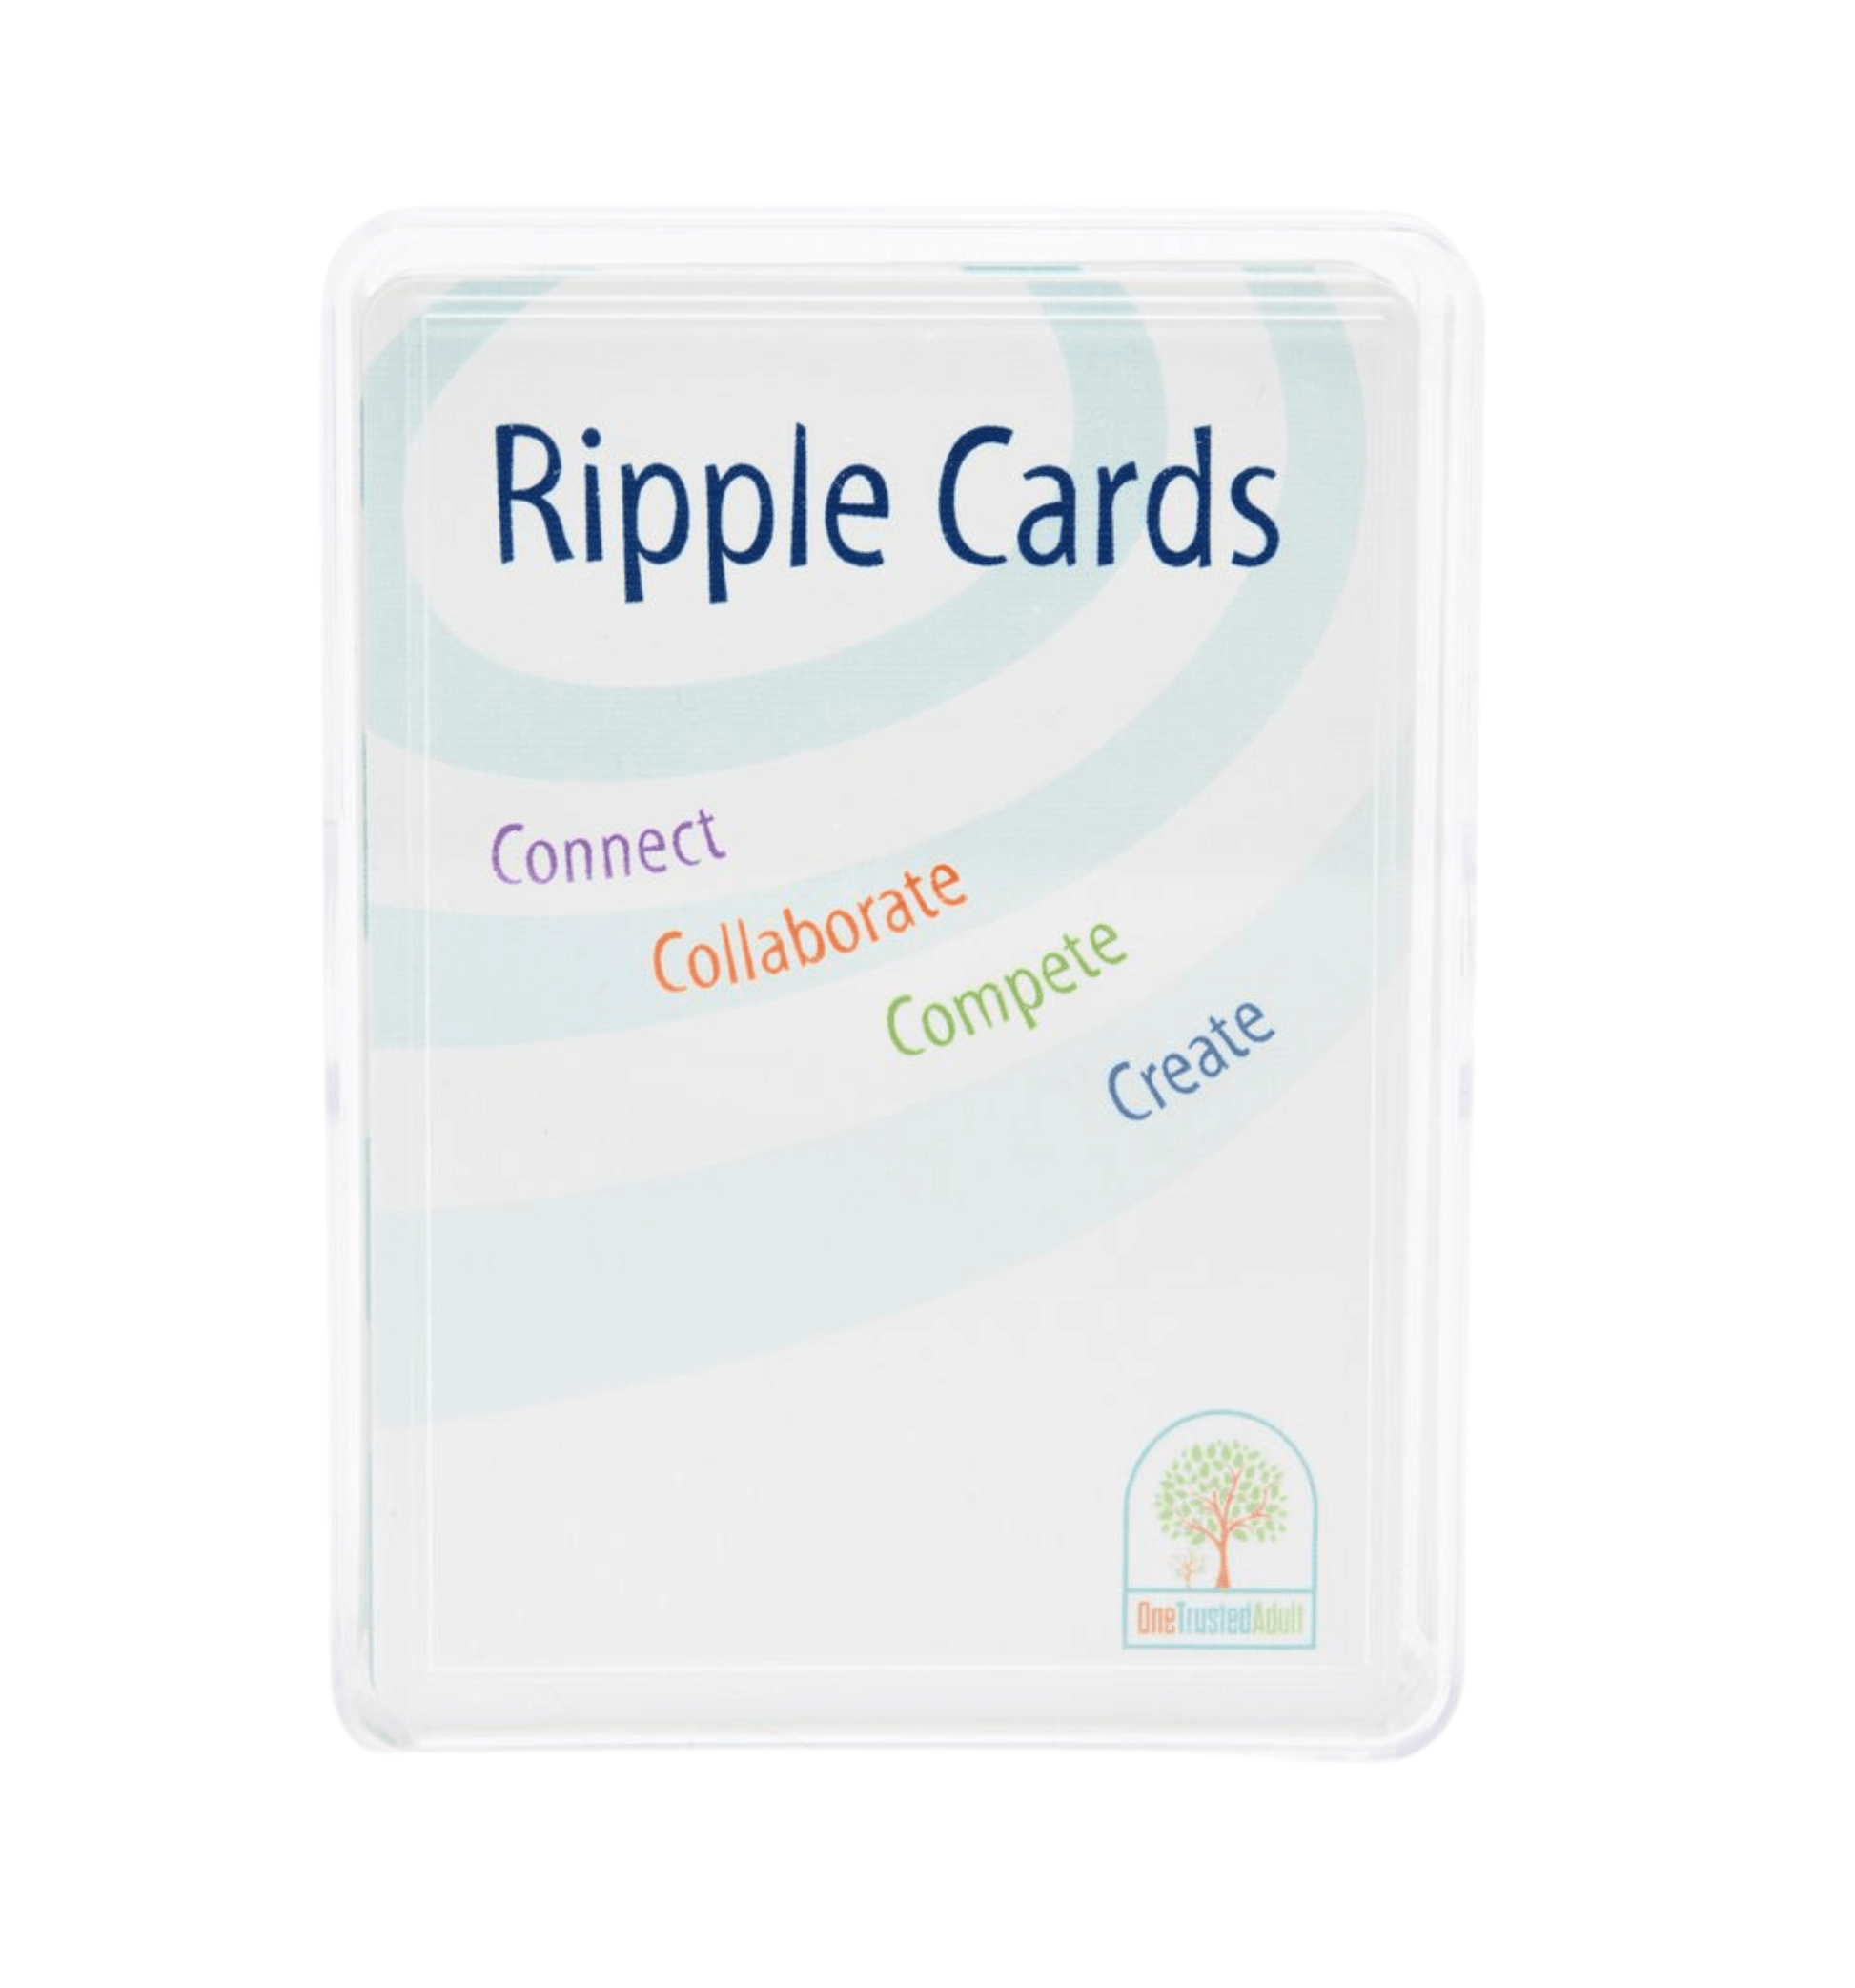 Ripple Cards